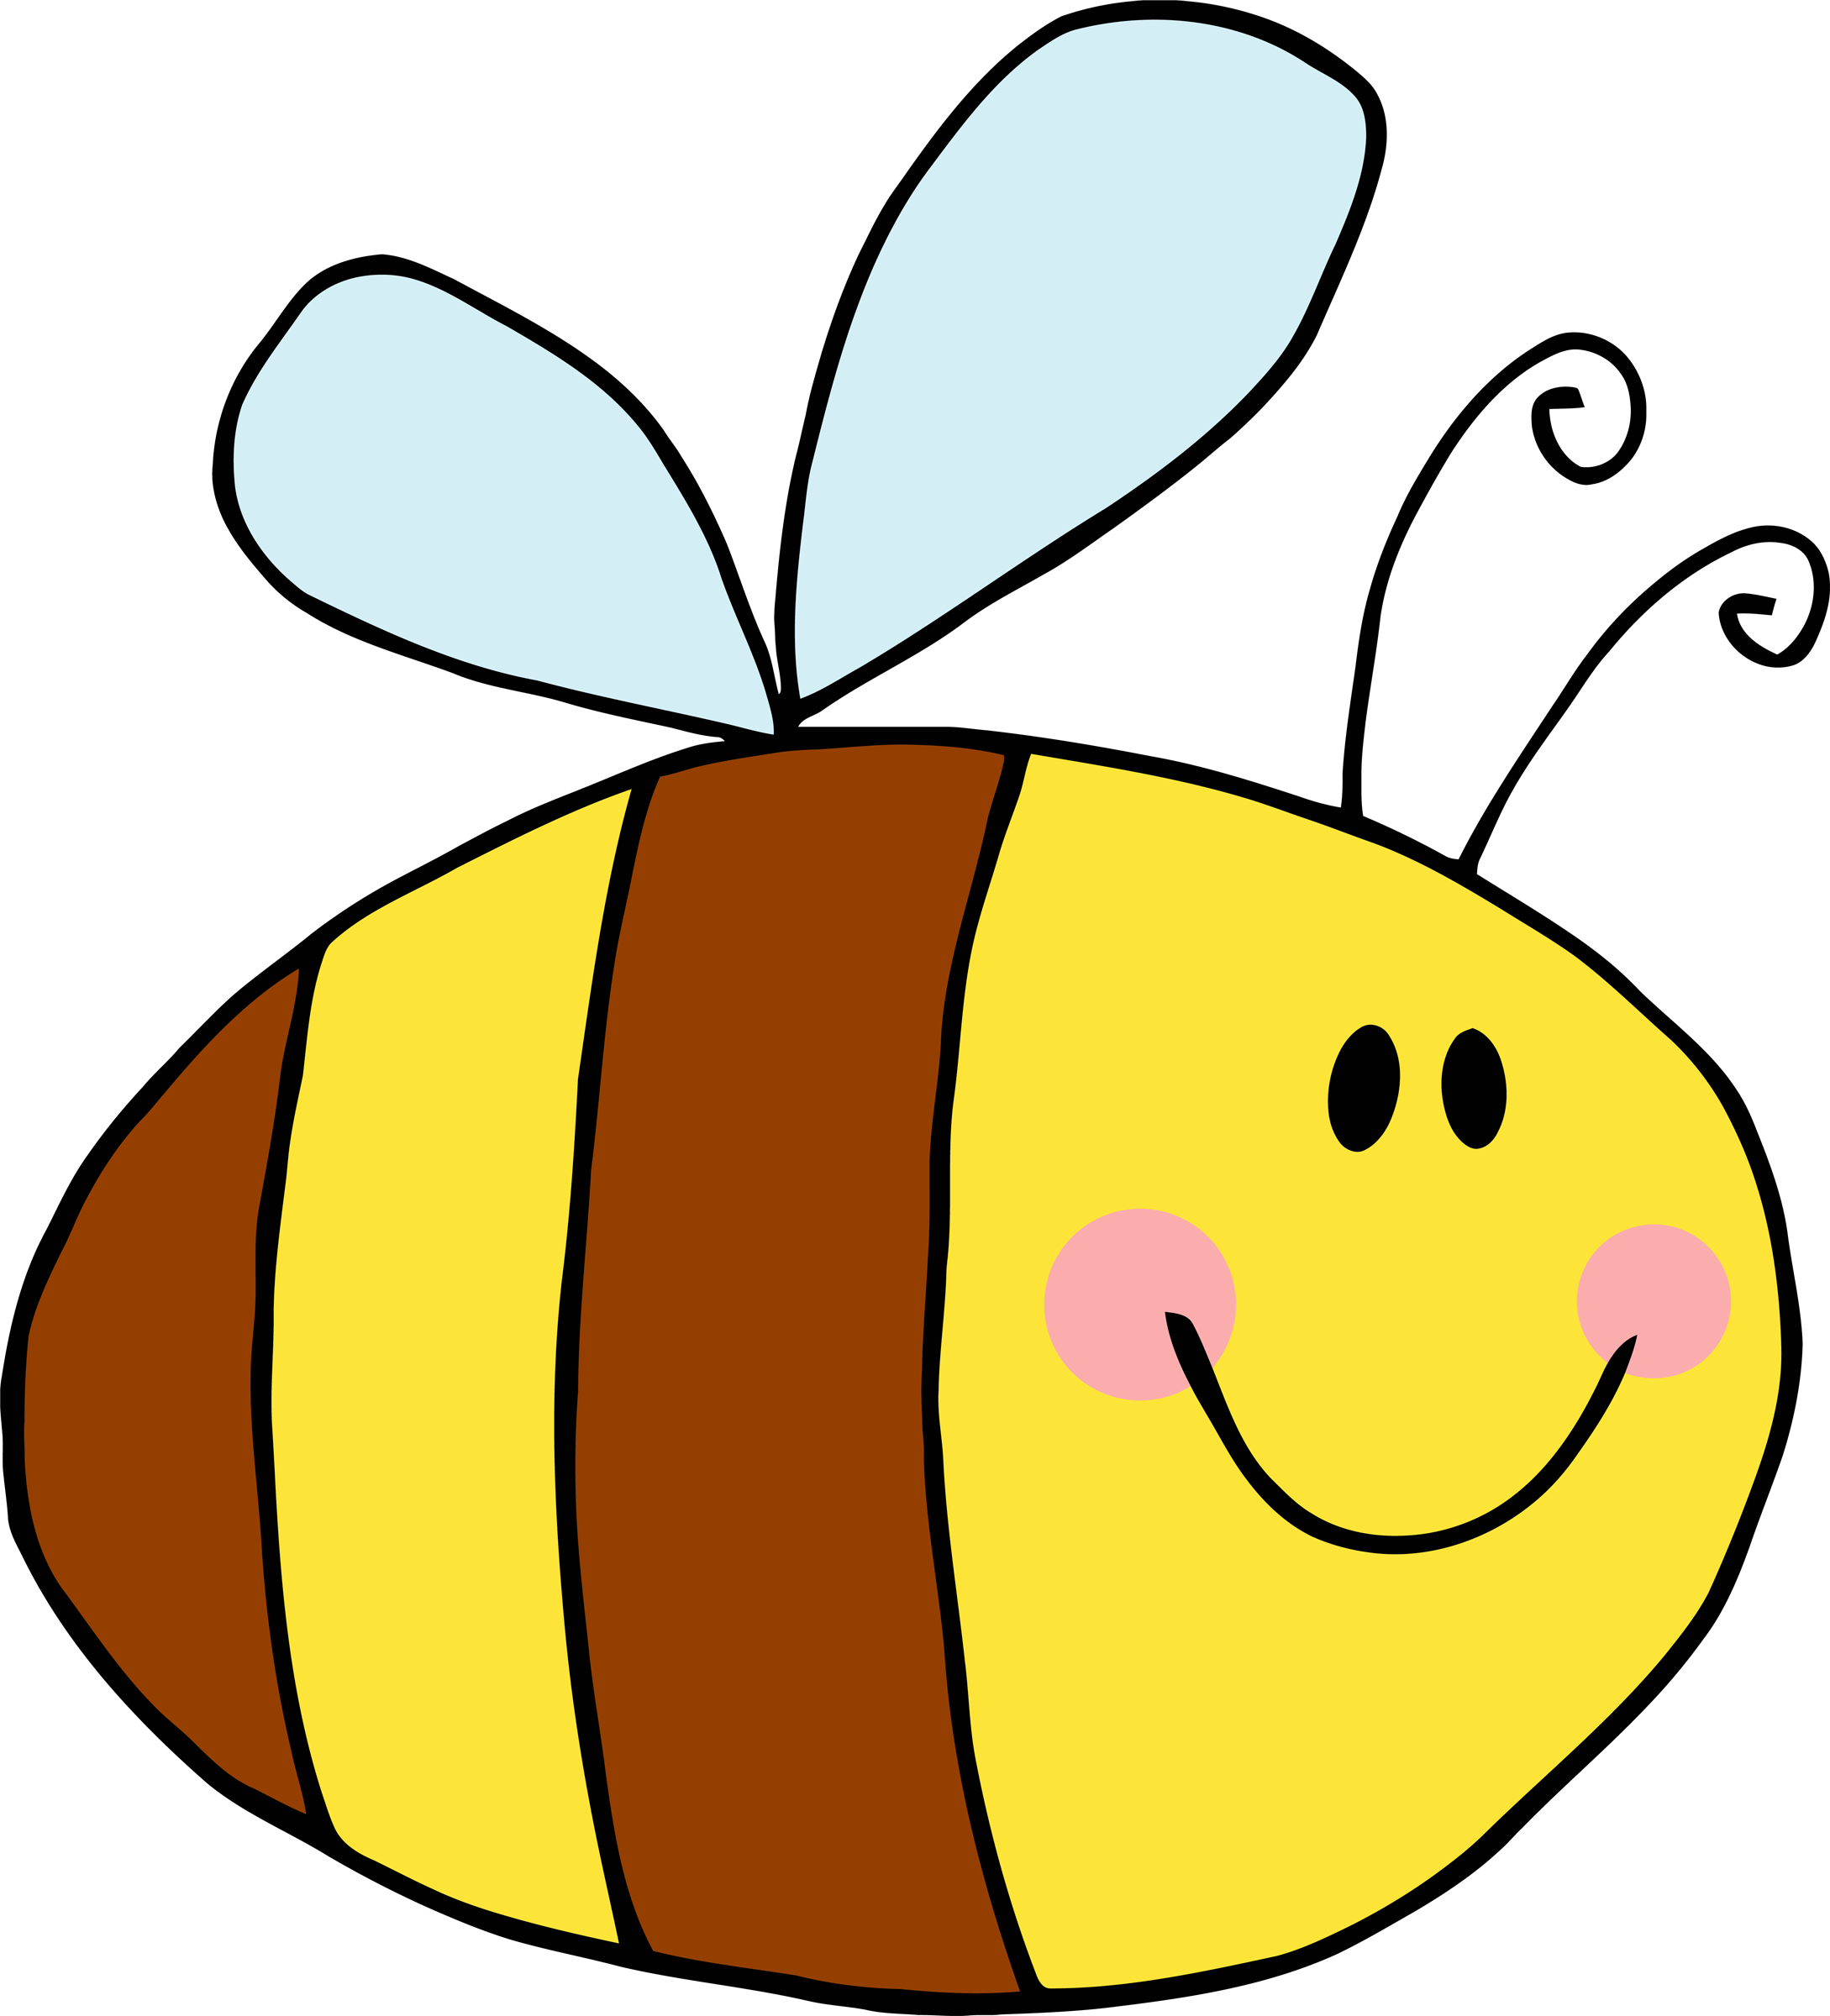 Bees Cartoon Cliparts.co